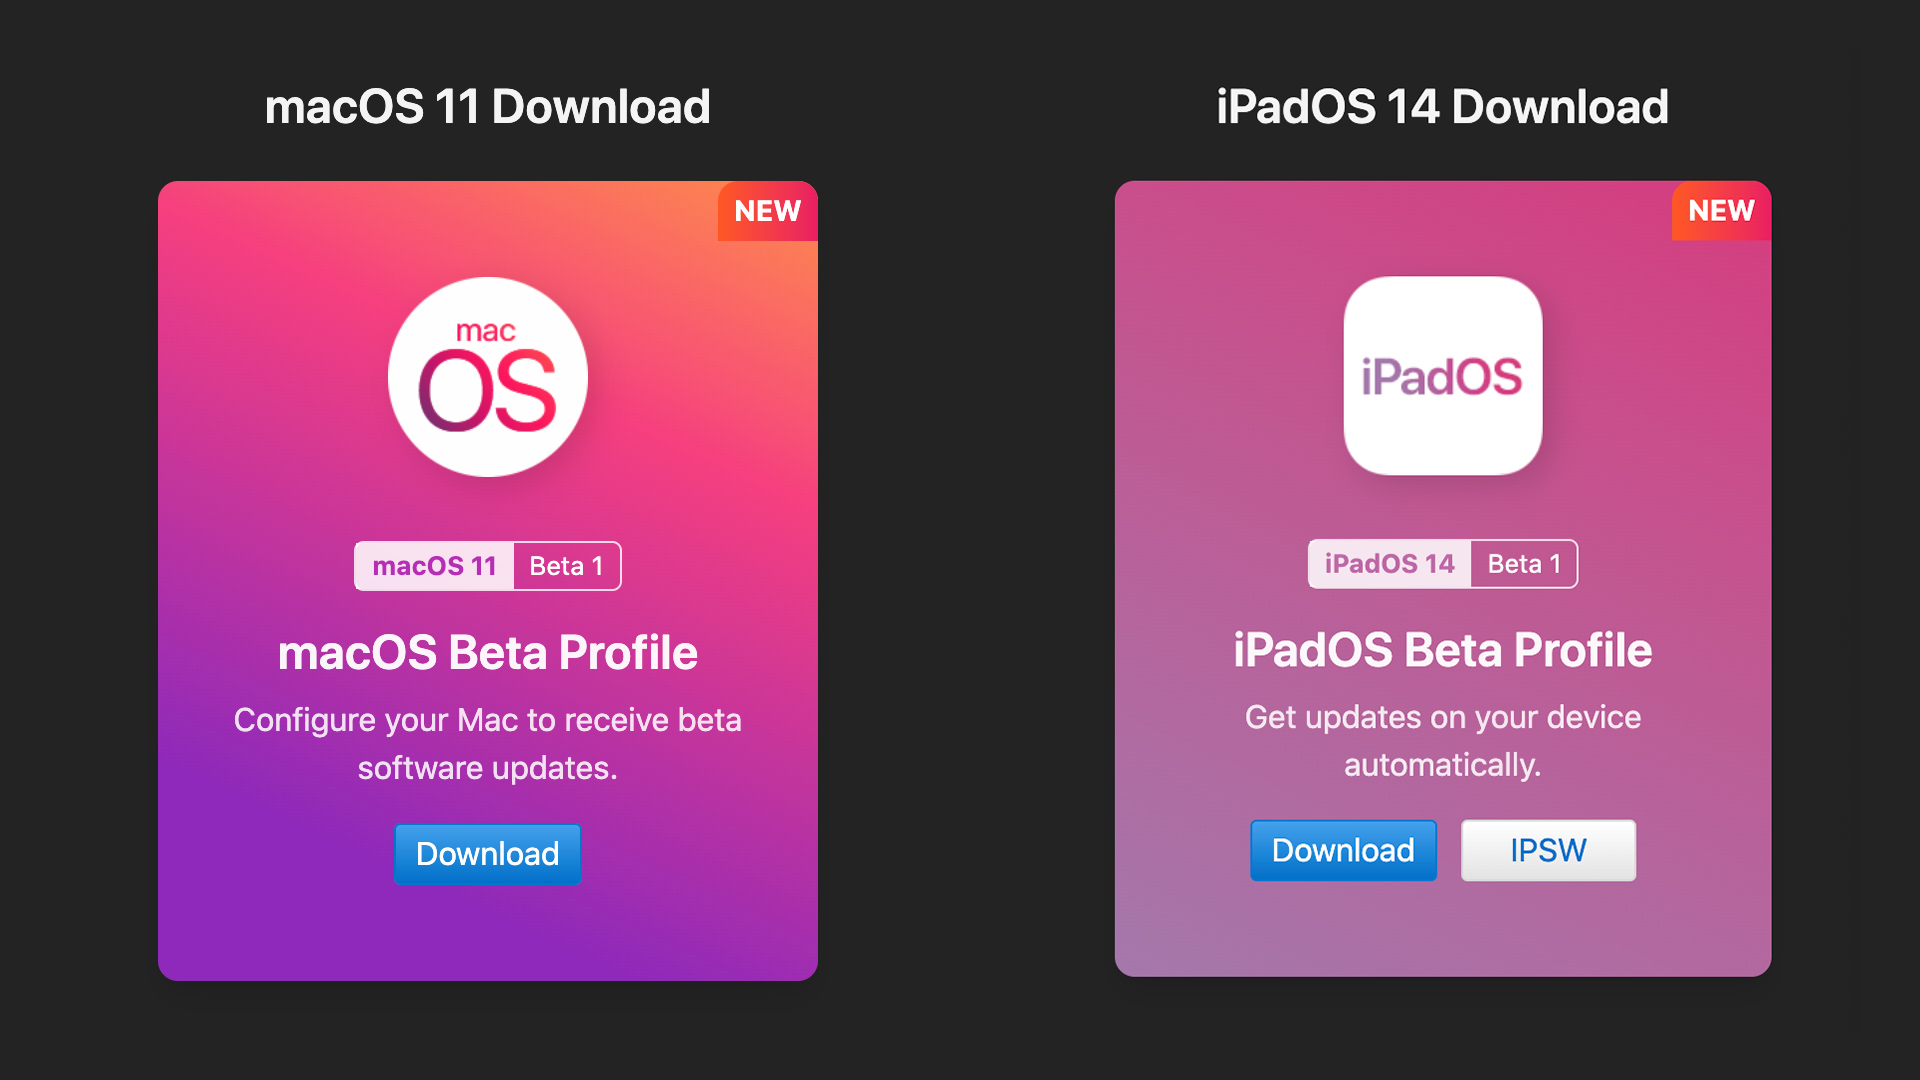 ipados 14 beta profile download